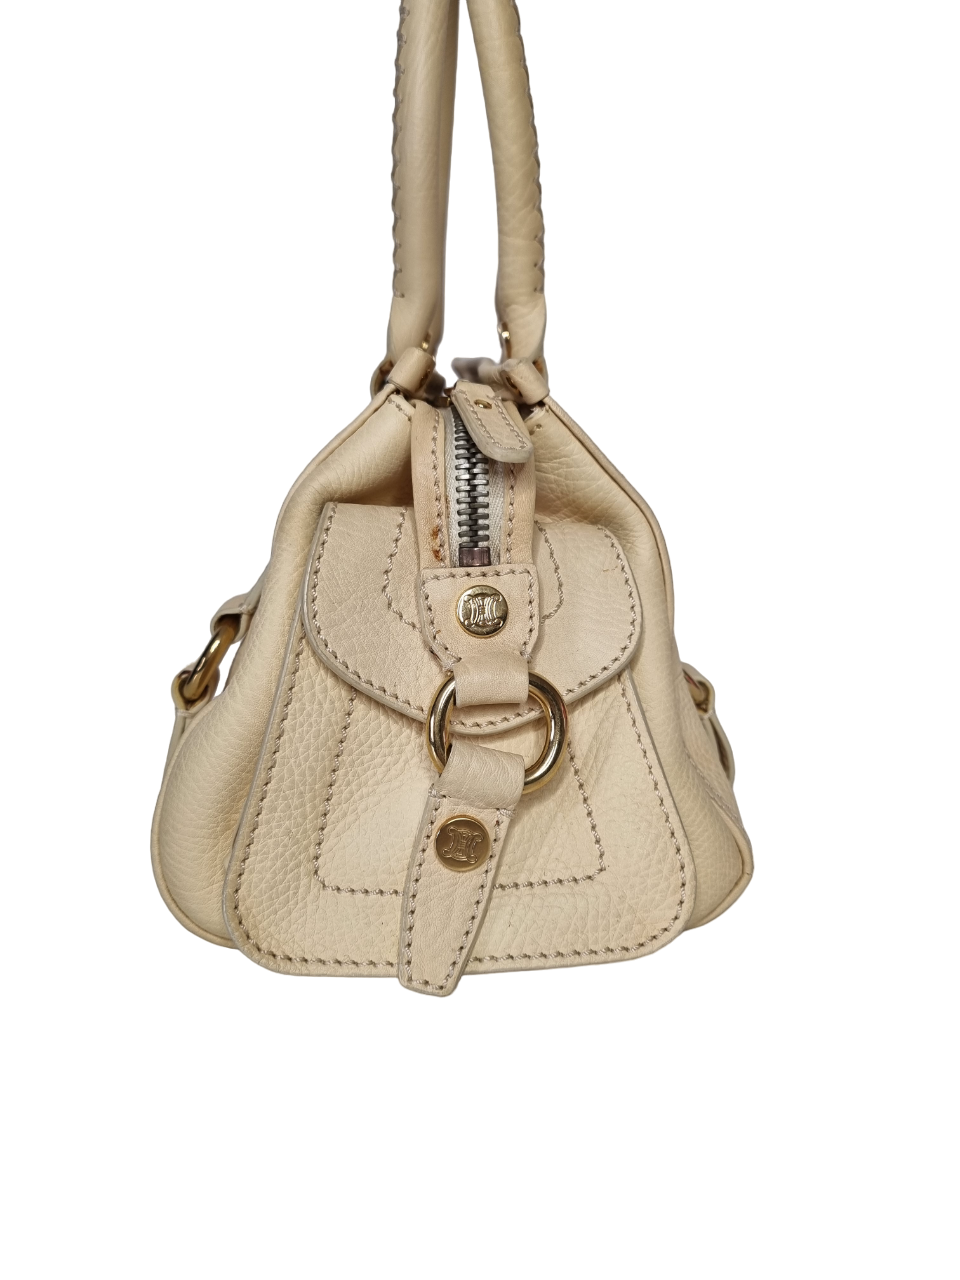 Celine beige leather handbag